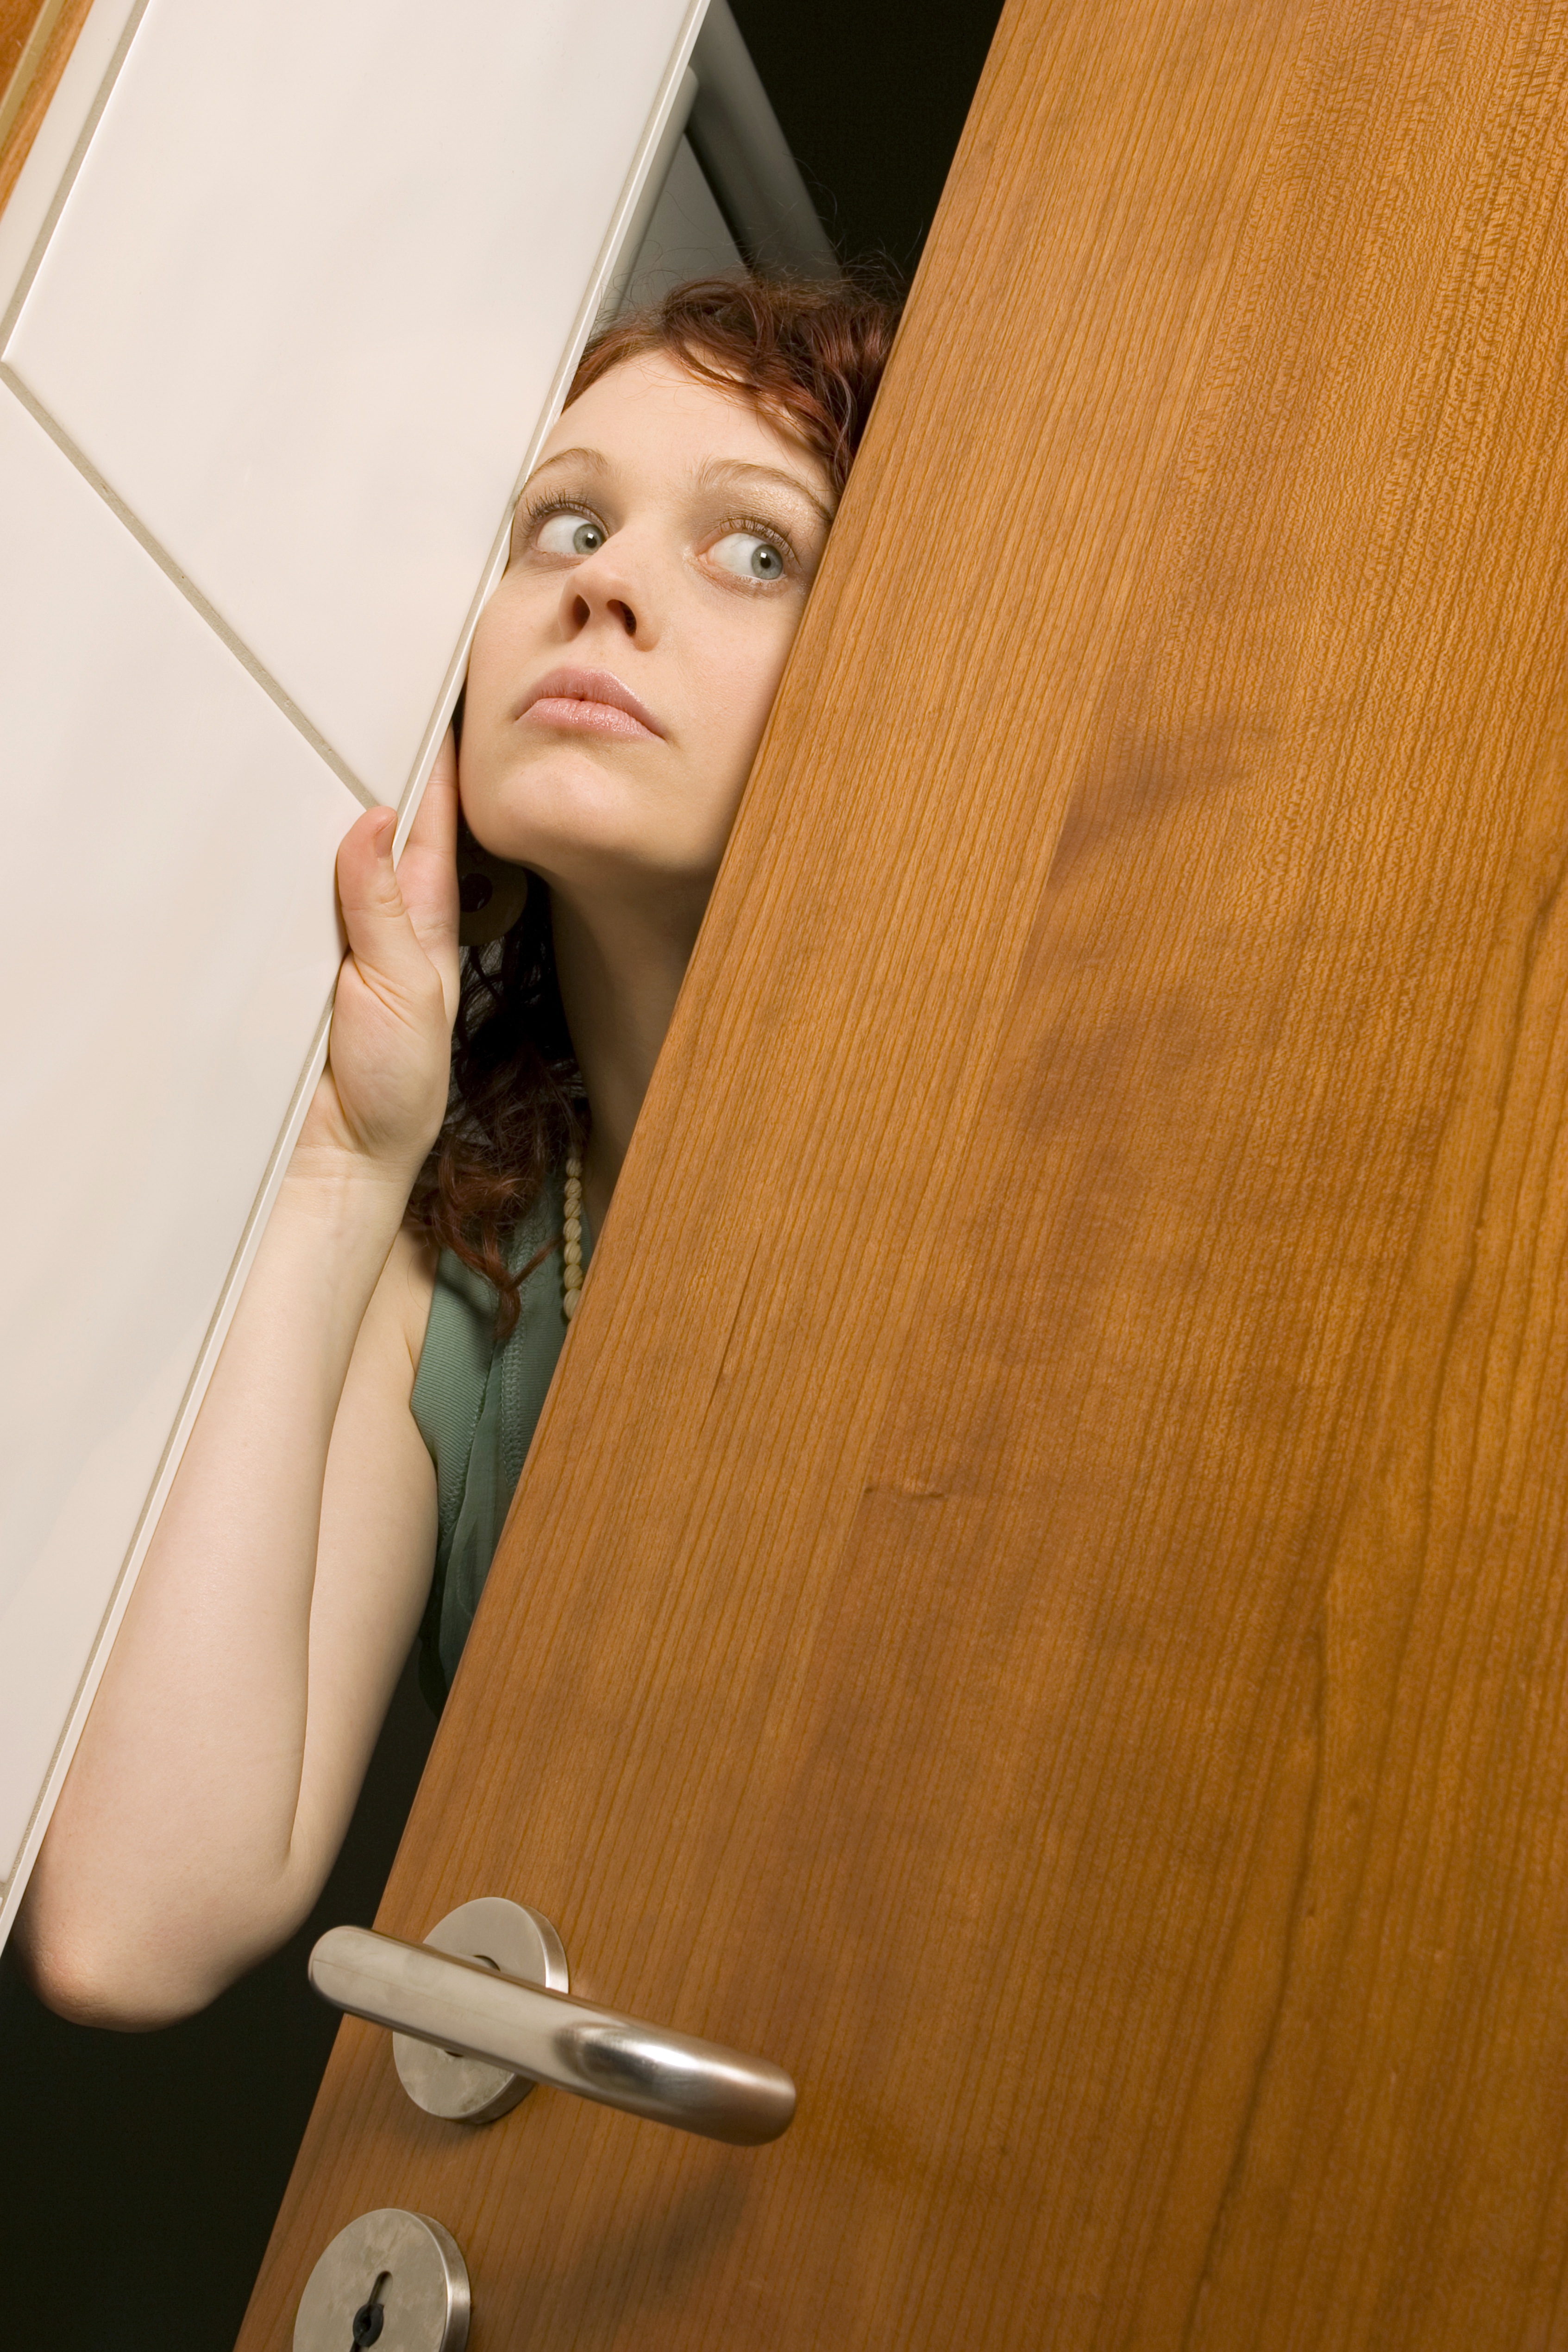 Woman peeking her head through a door | Source: Getty Images